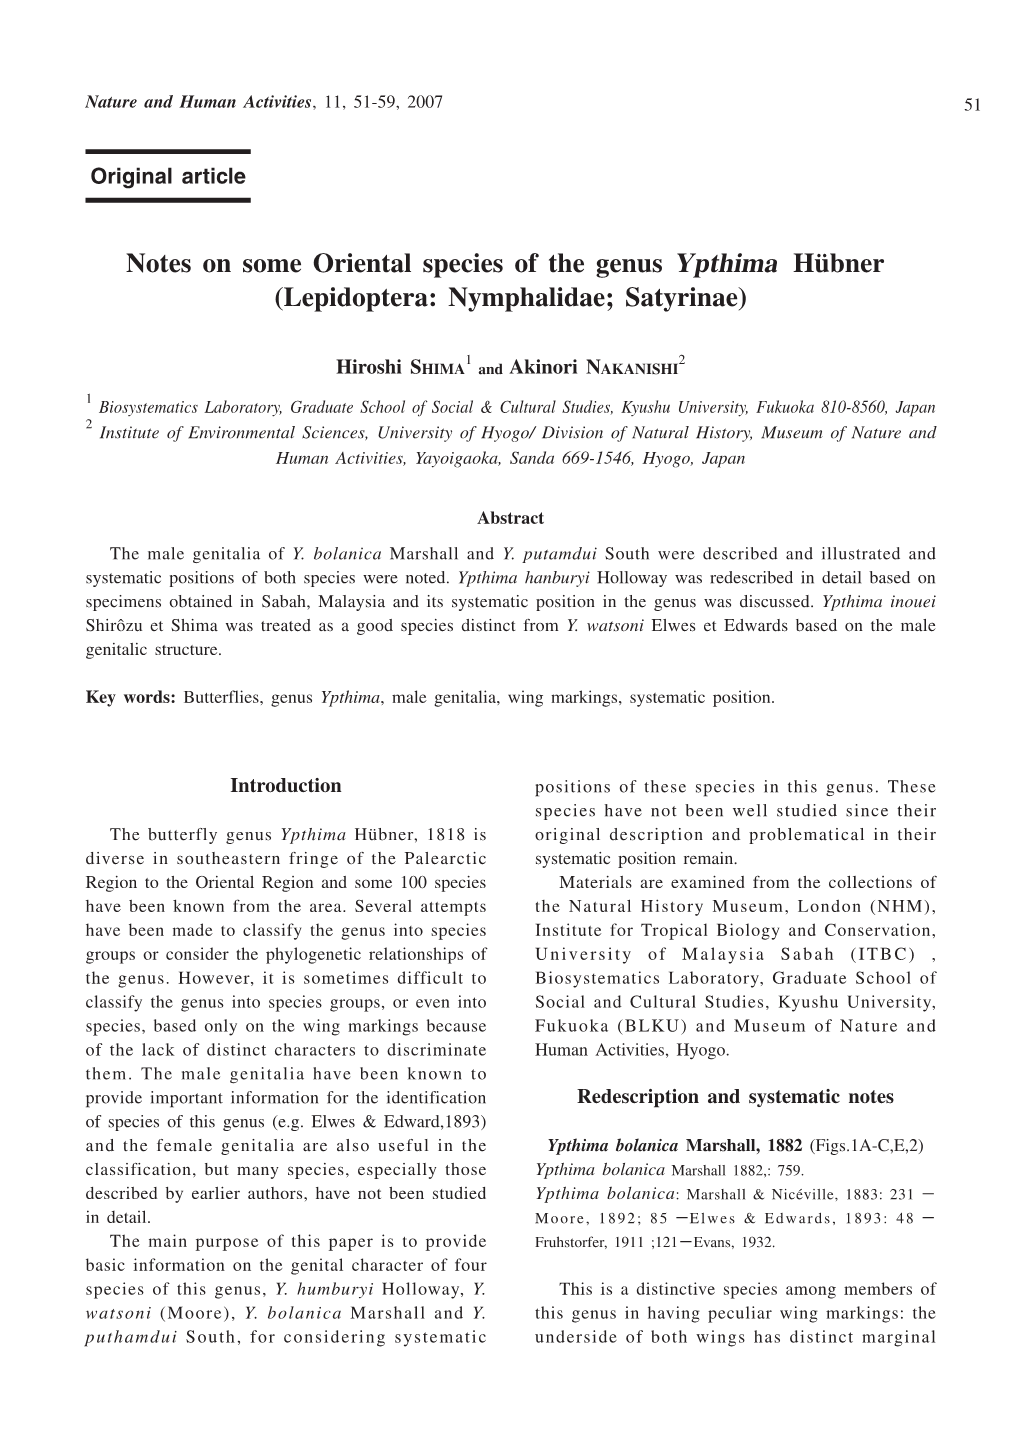 Notes on Some Oriental Species of the Genus Ypthima Hübner (Lepidoptera: Nymphalidae; Satyrinae)